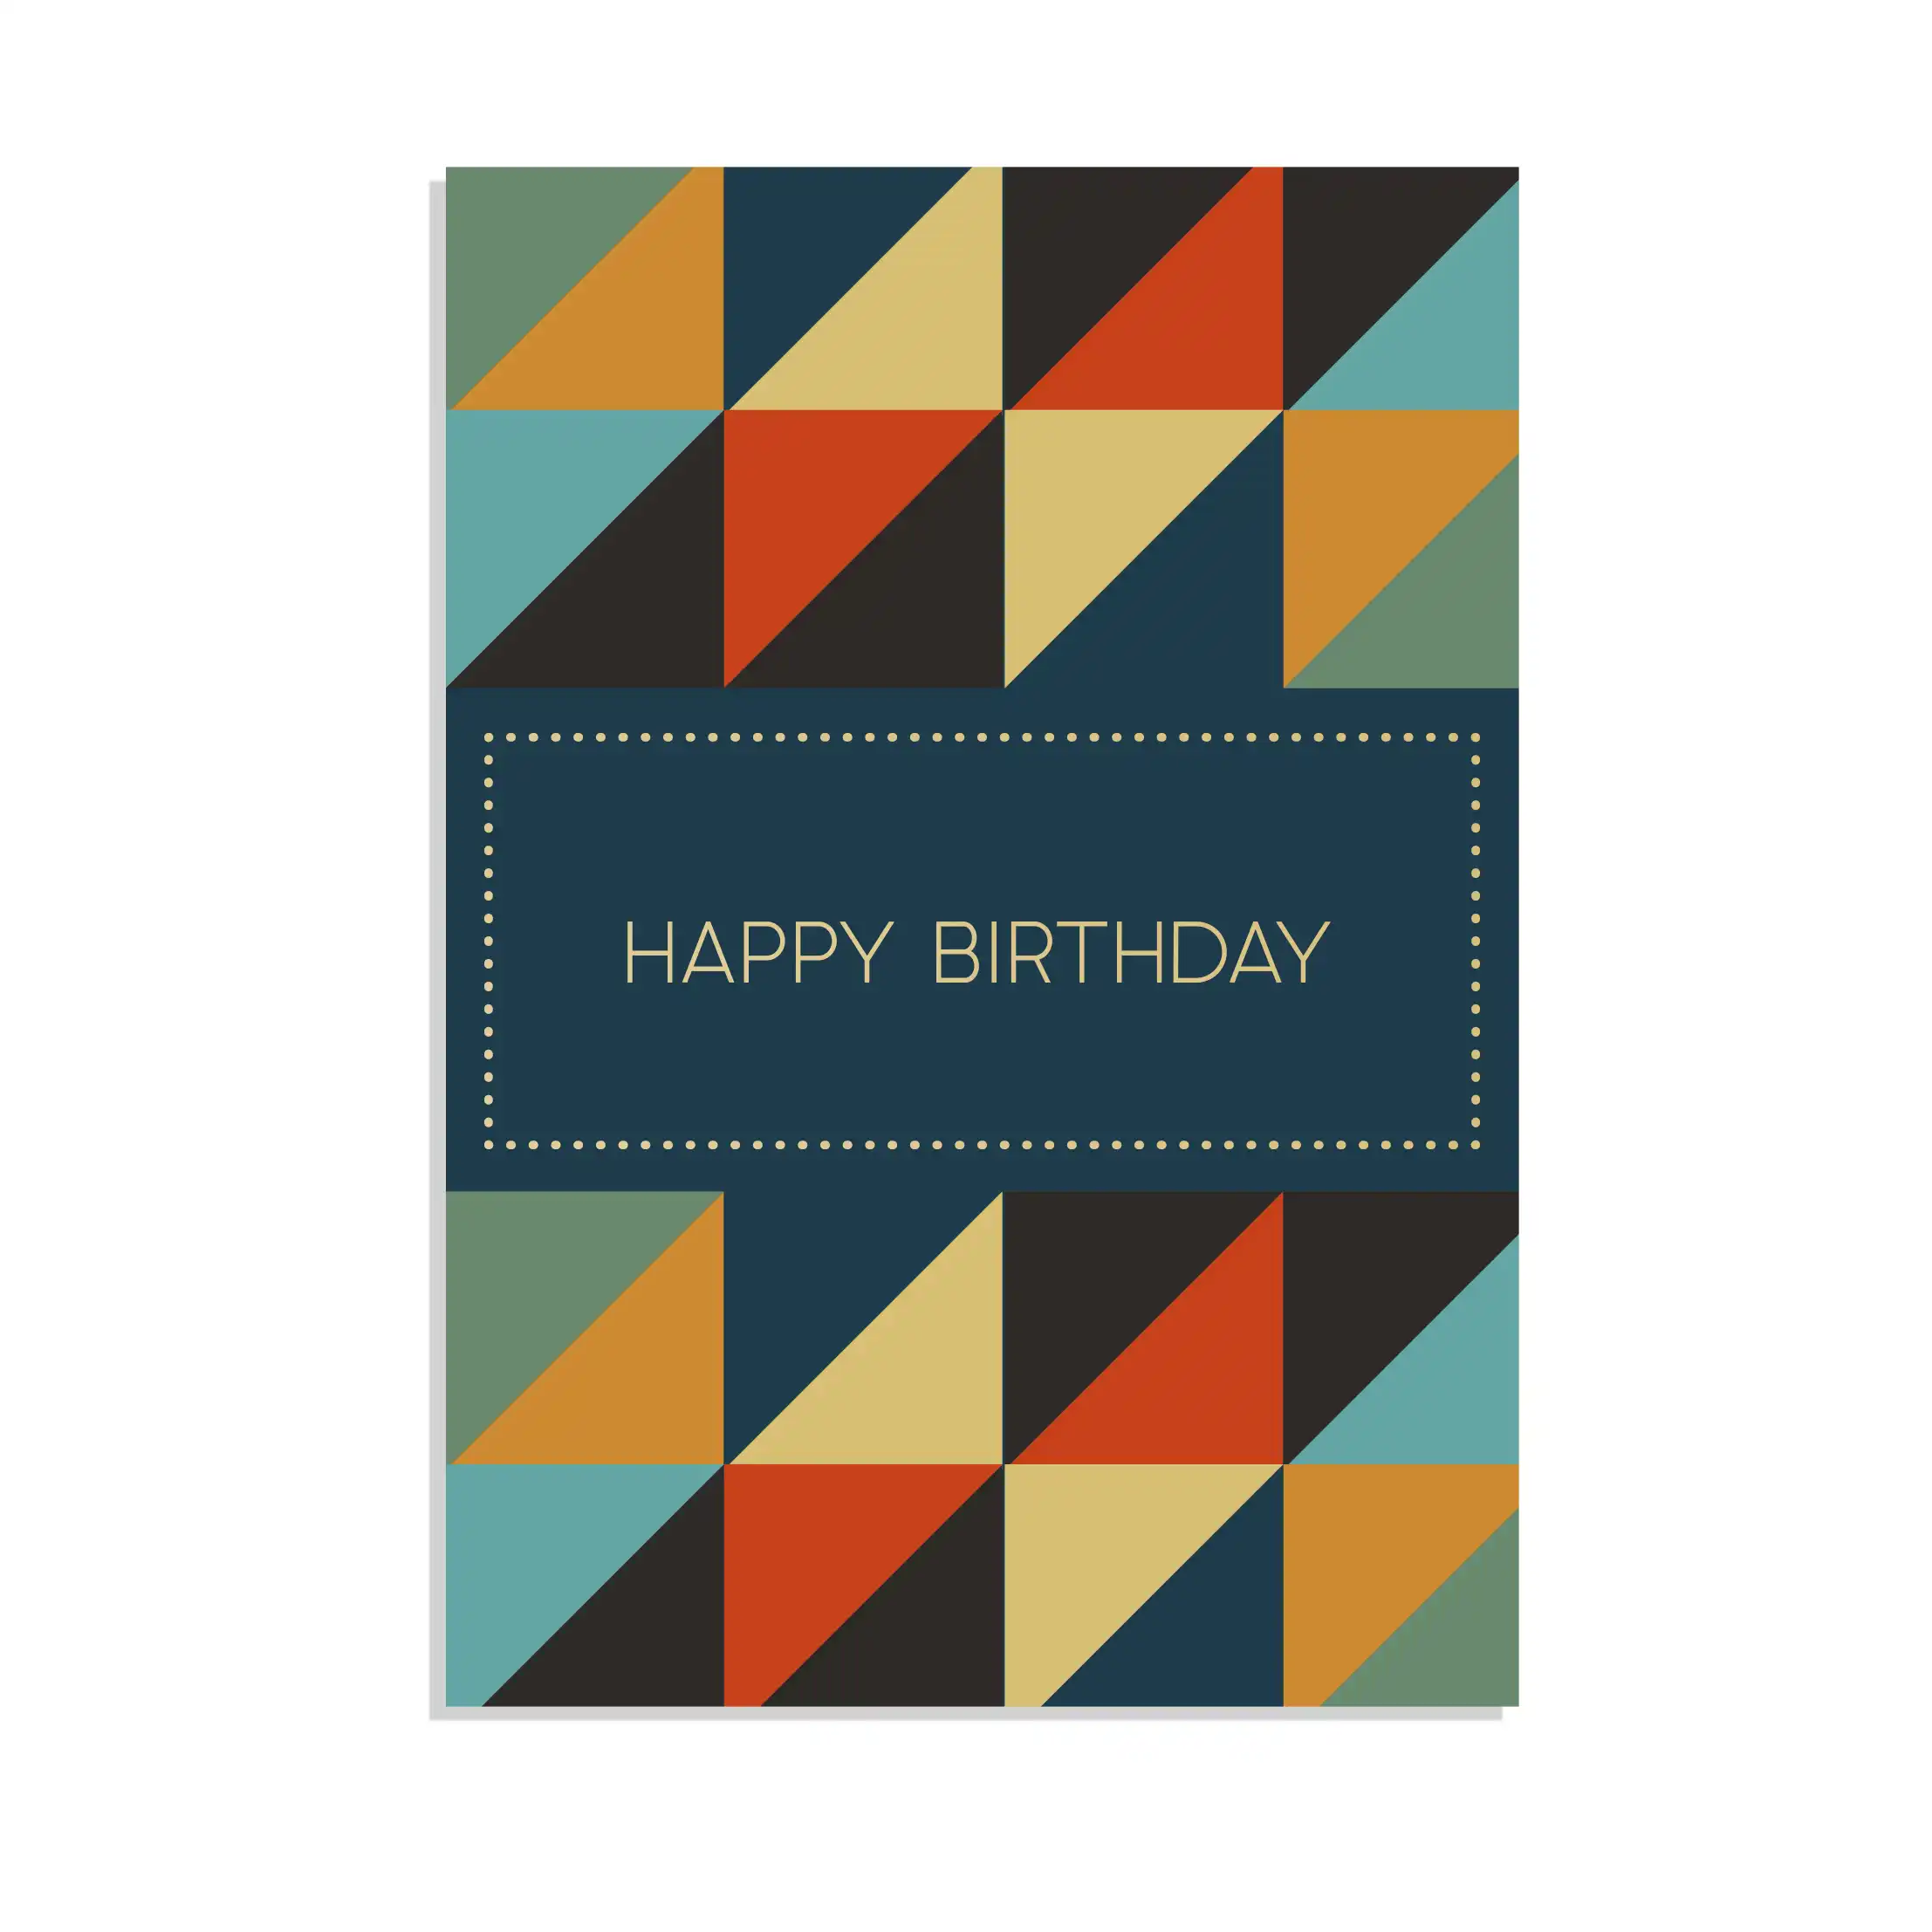 greetings card - geometric